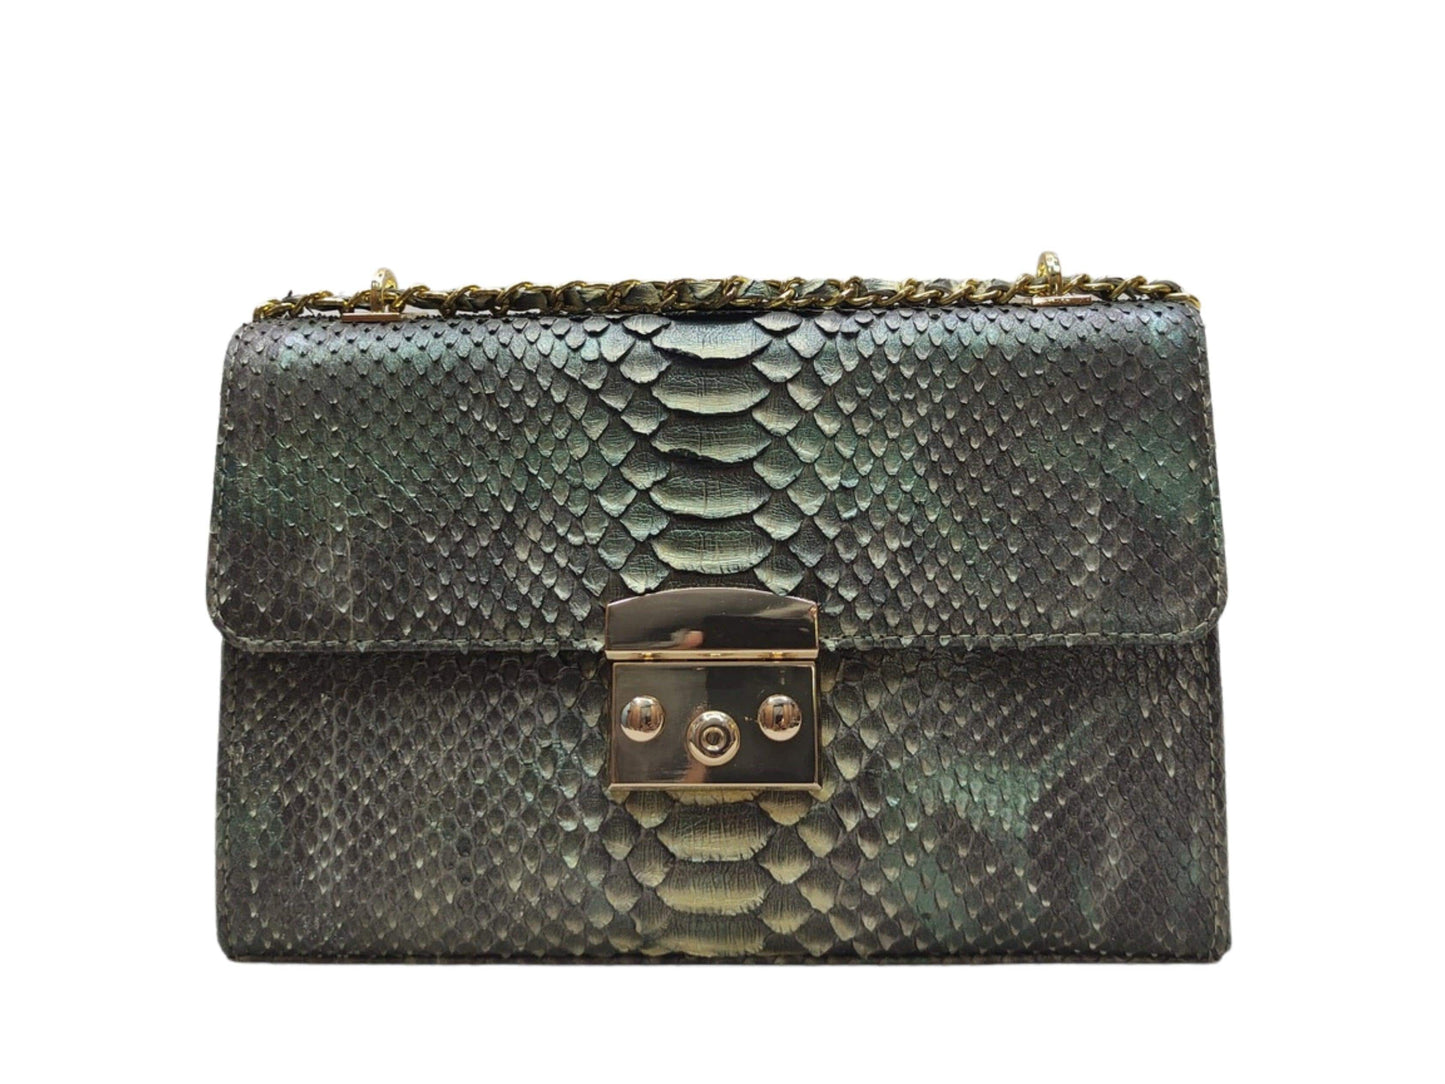 Python Bags Snakeskin Python Small Handbag Lunar Green Python Jacket by LFM Fashion